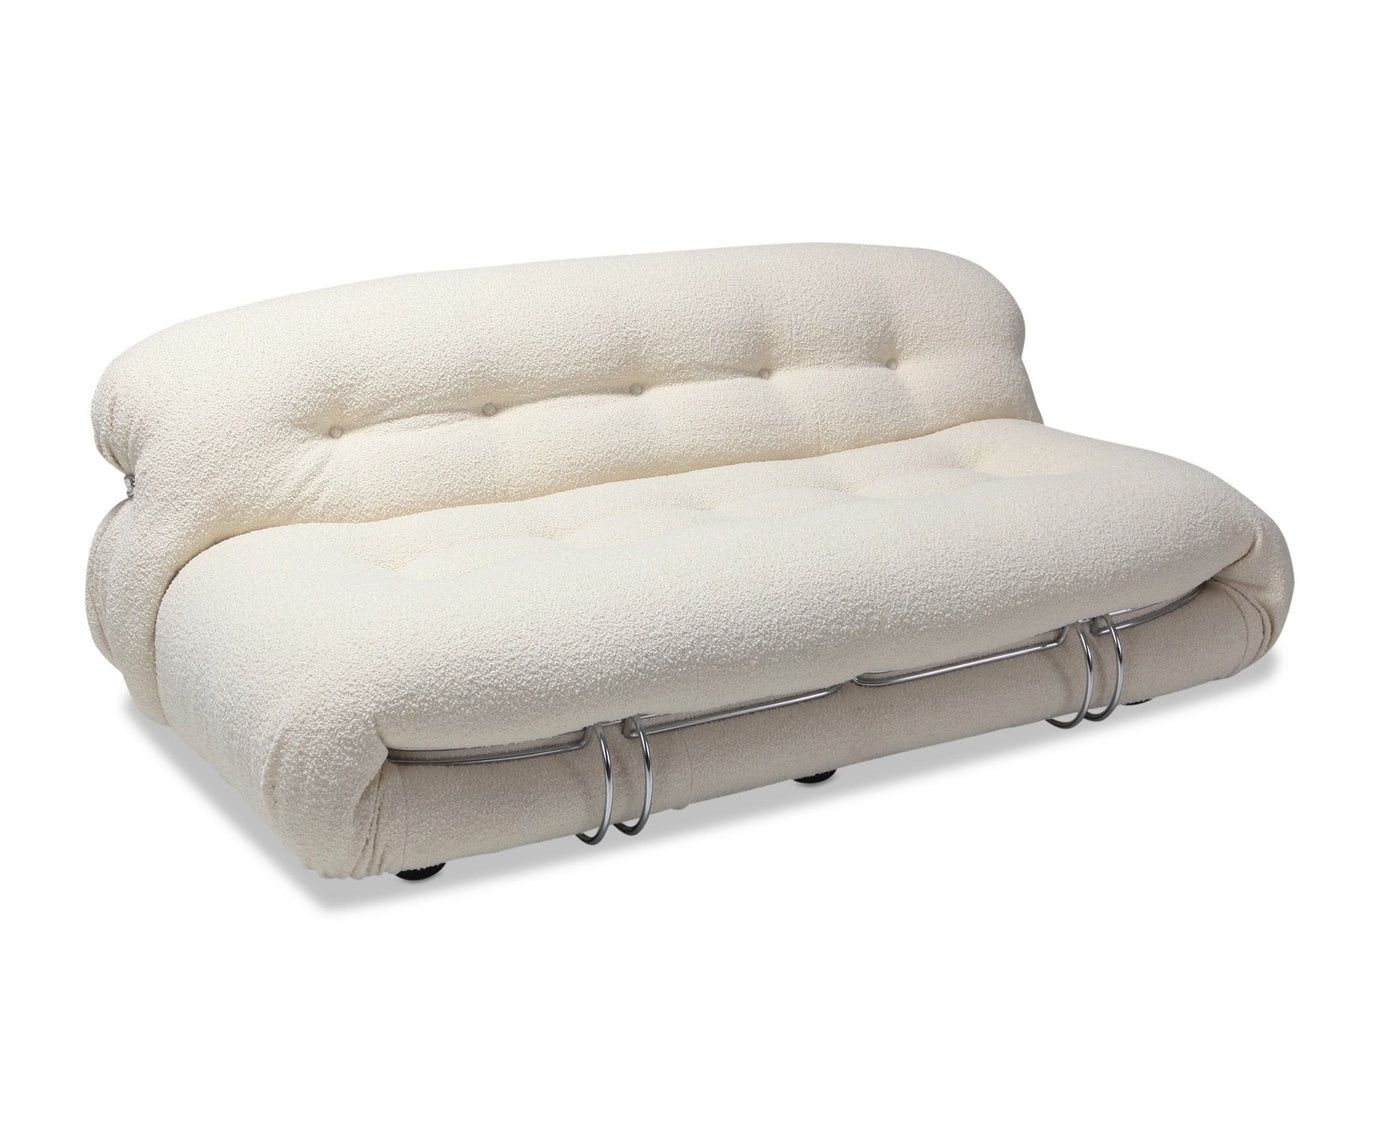 Homio Decor Living Room Off-White / 2-Seater Soriana Armless Lounger